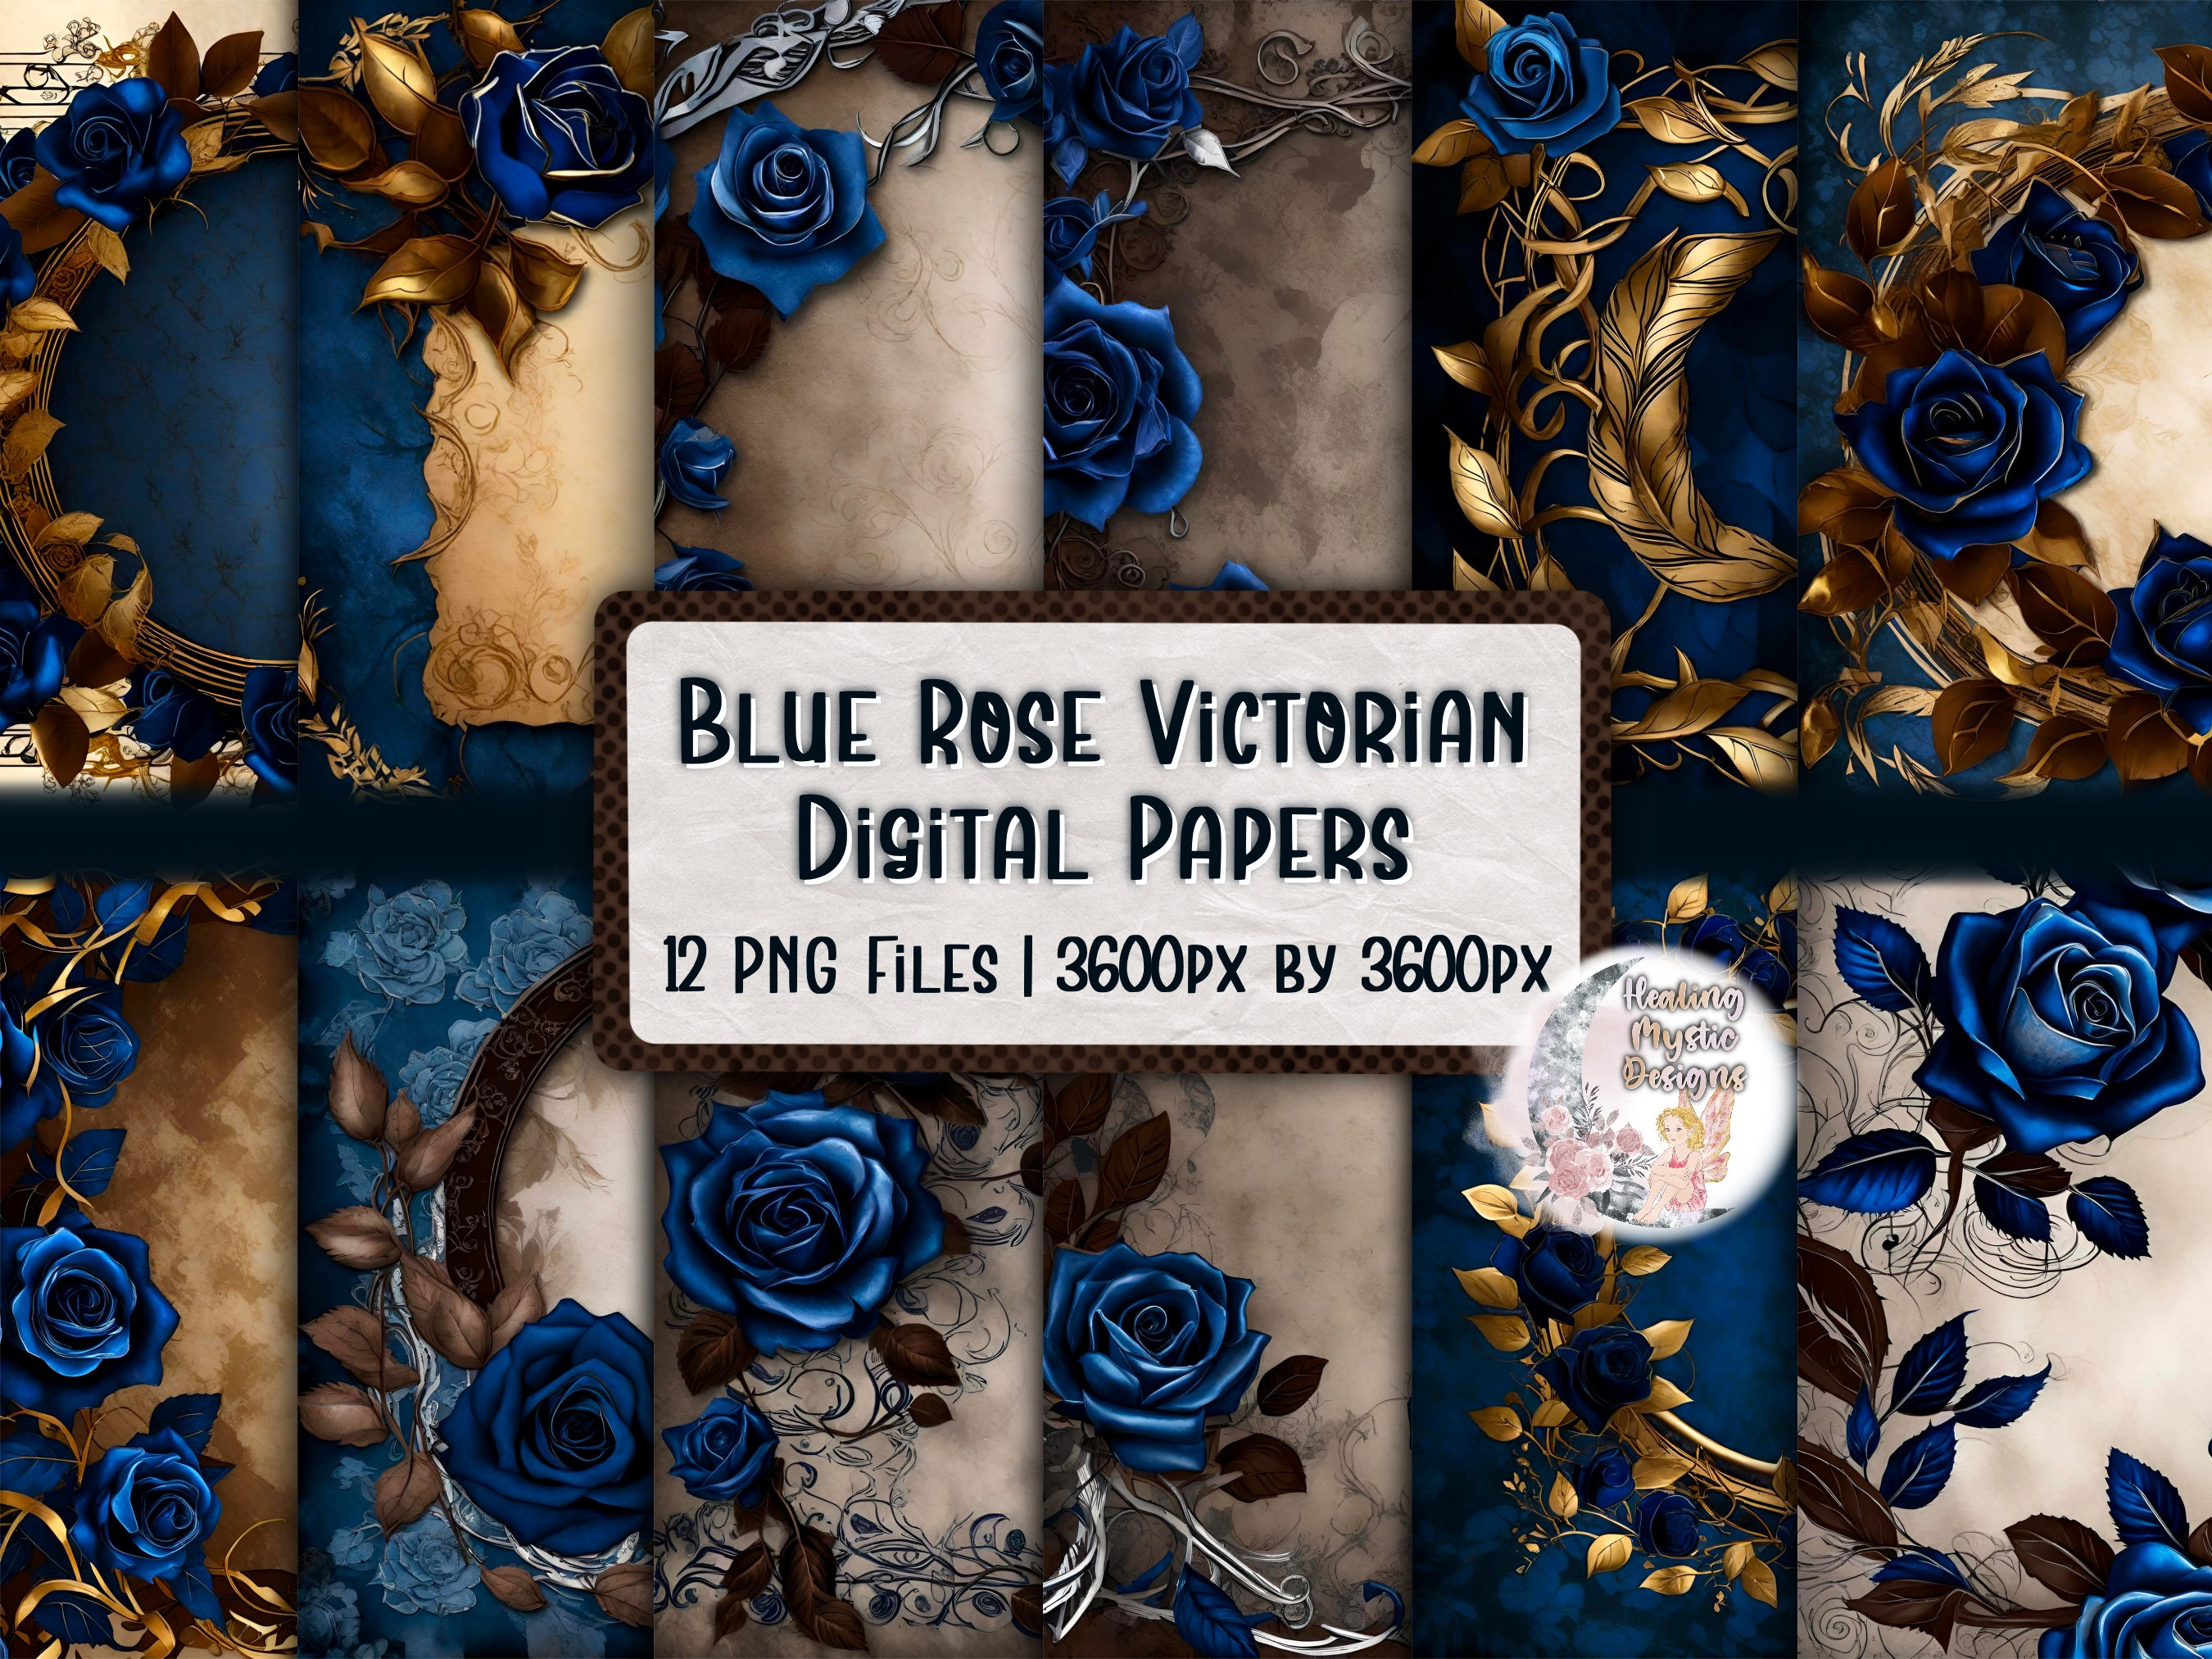 Blue Gold Glam Rose Clip Art, Digital Instant Download Glitter Flower Png  Embellishments, Blue Rose, Gold Glitter Roses Commercial Use 